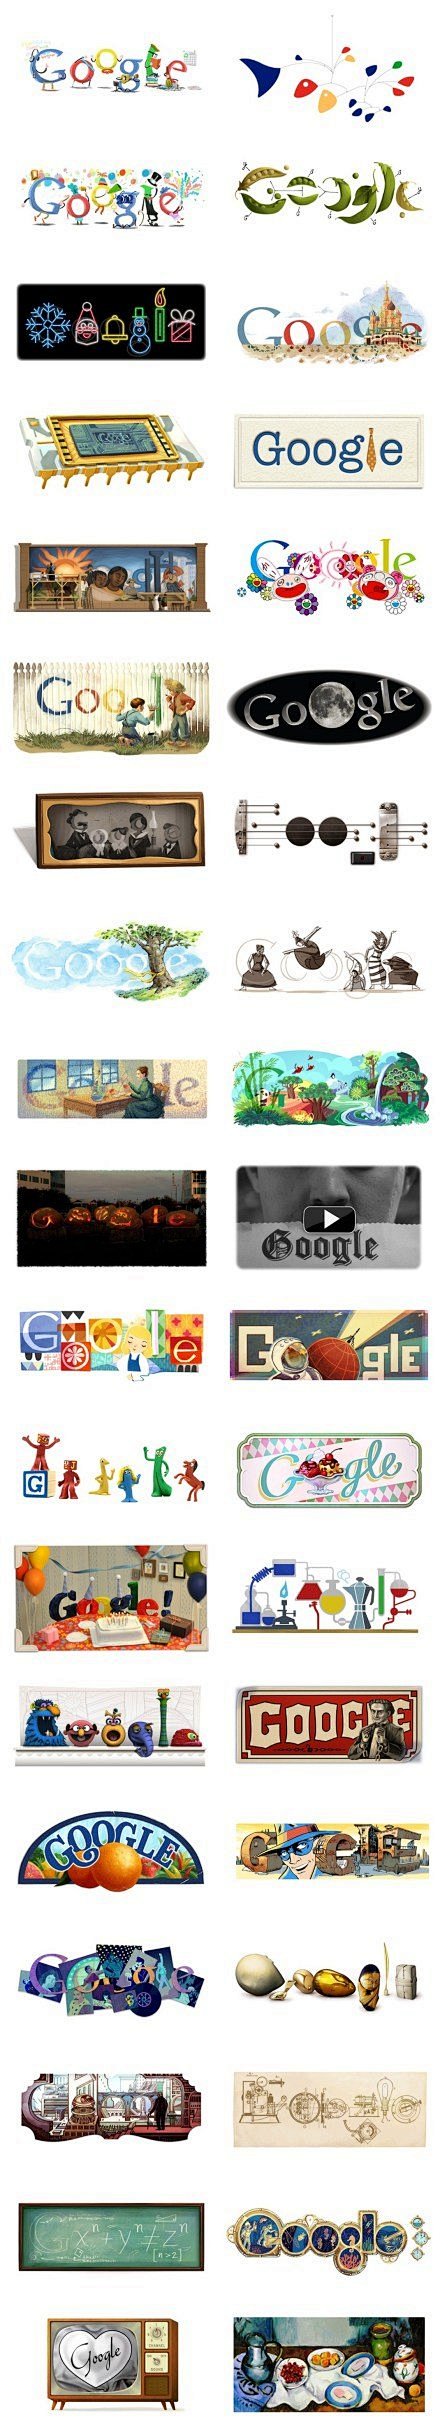 2011年Google的Doodles ...